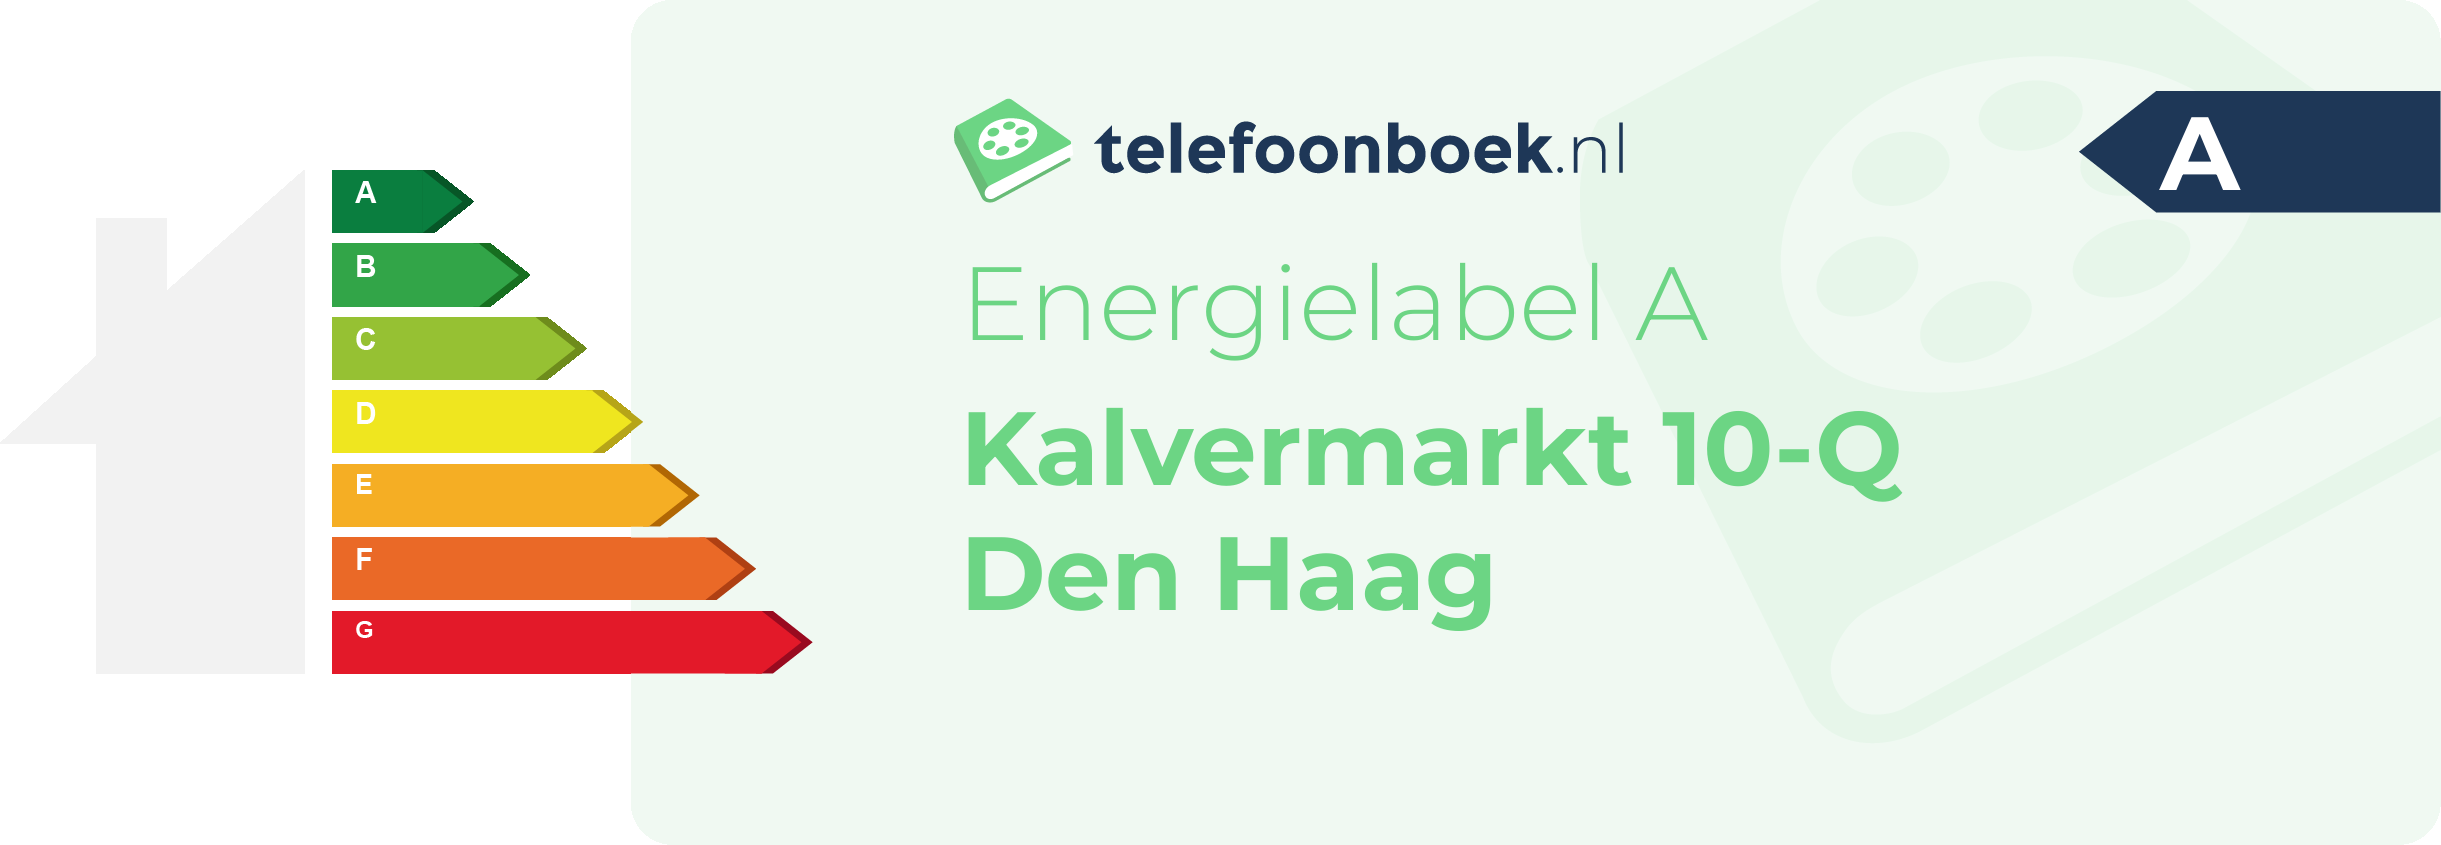 Energielabel Kalvermarkt 10-Q Den Haag